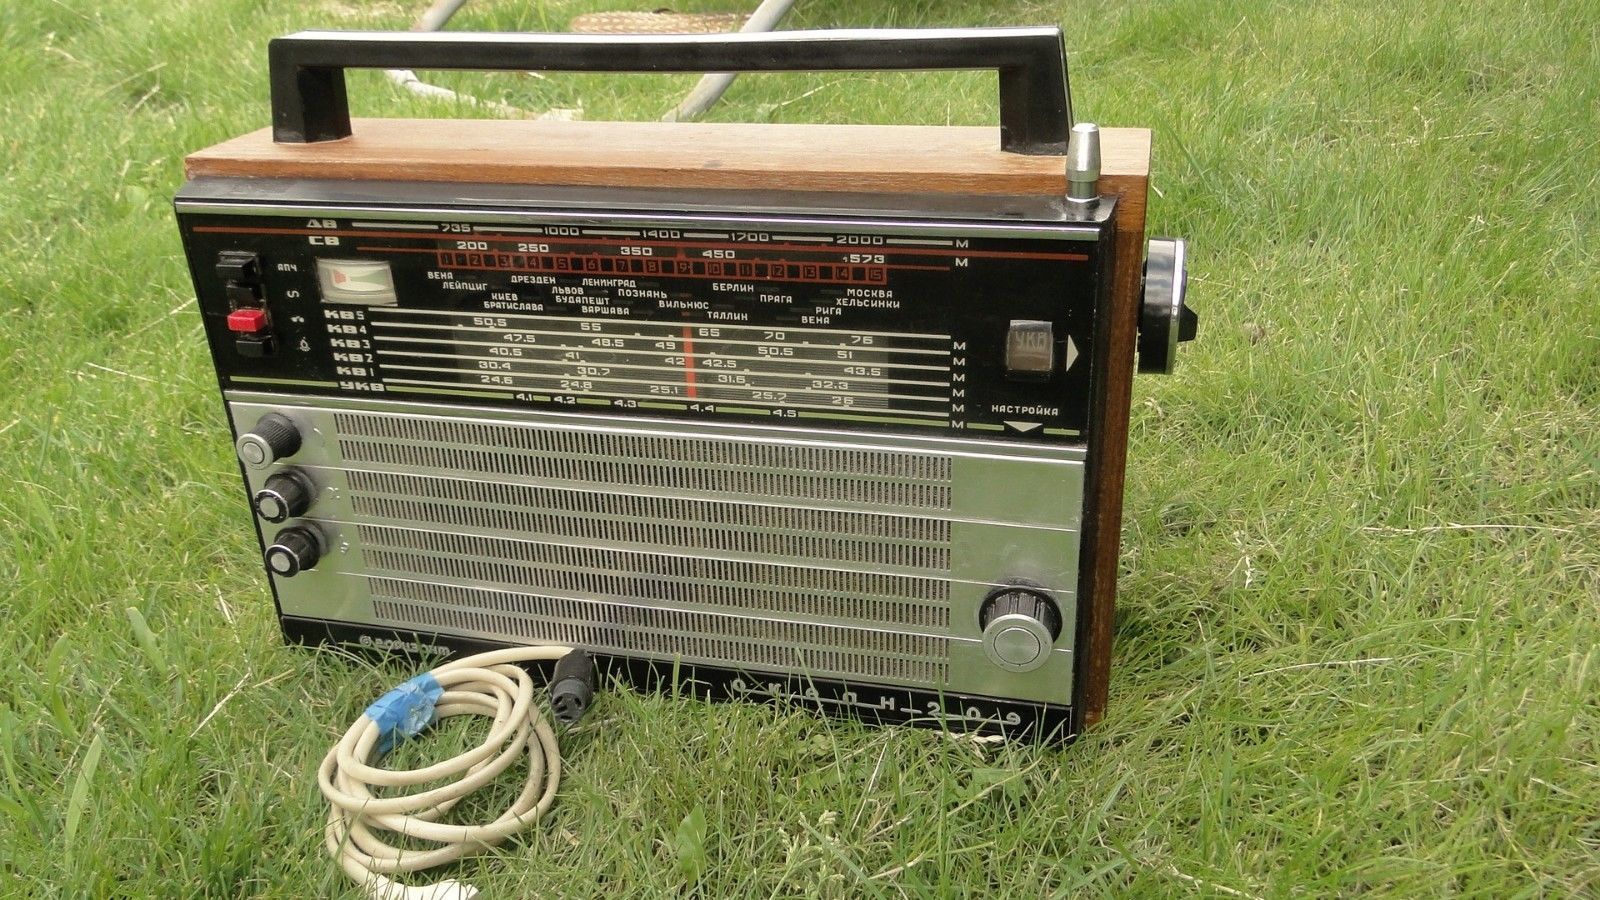  Vintage OKEAN 209 Radio LW MW SW UKW  Soviet Vintage Receiver Radio CCCP Russia - $79.19